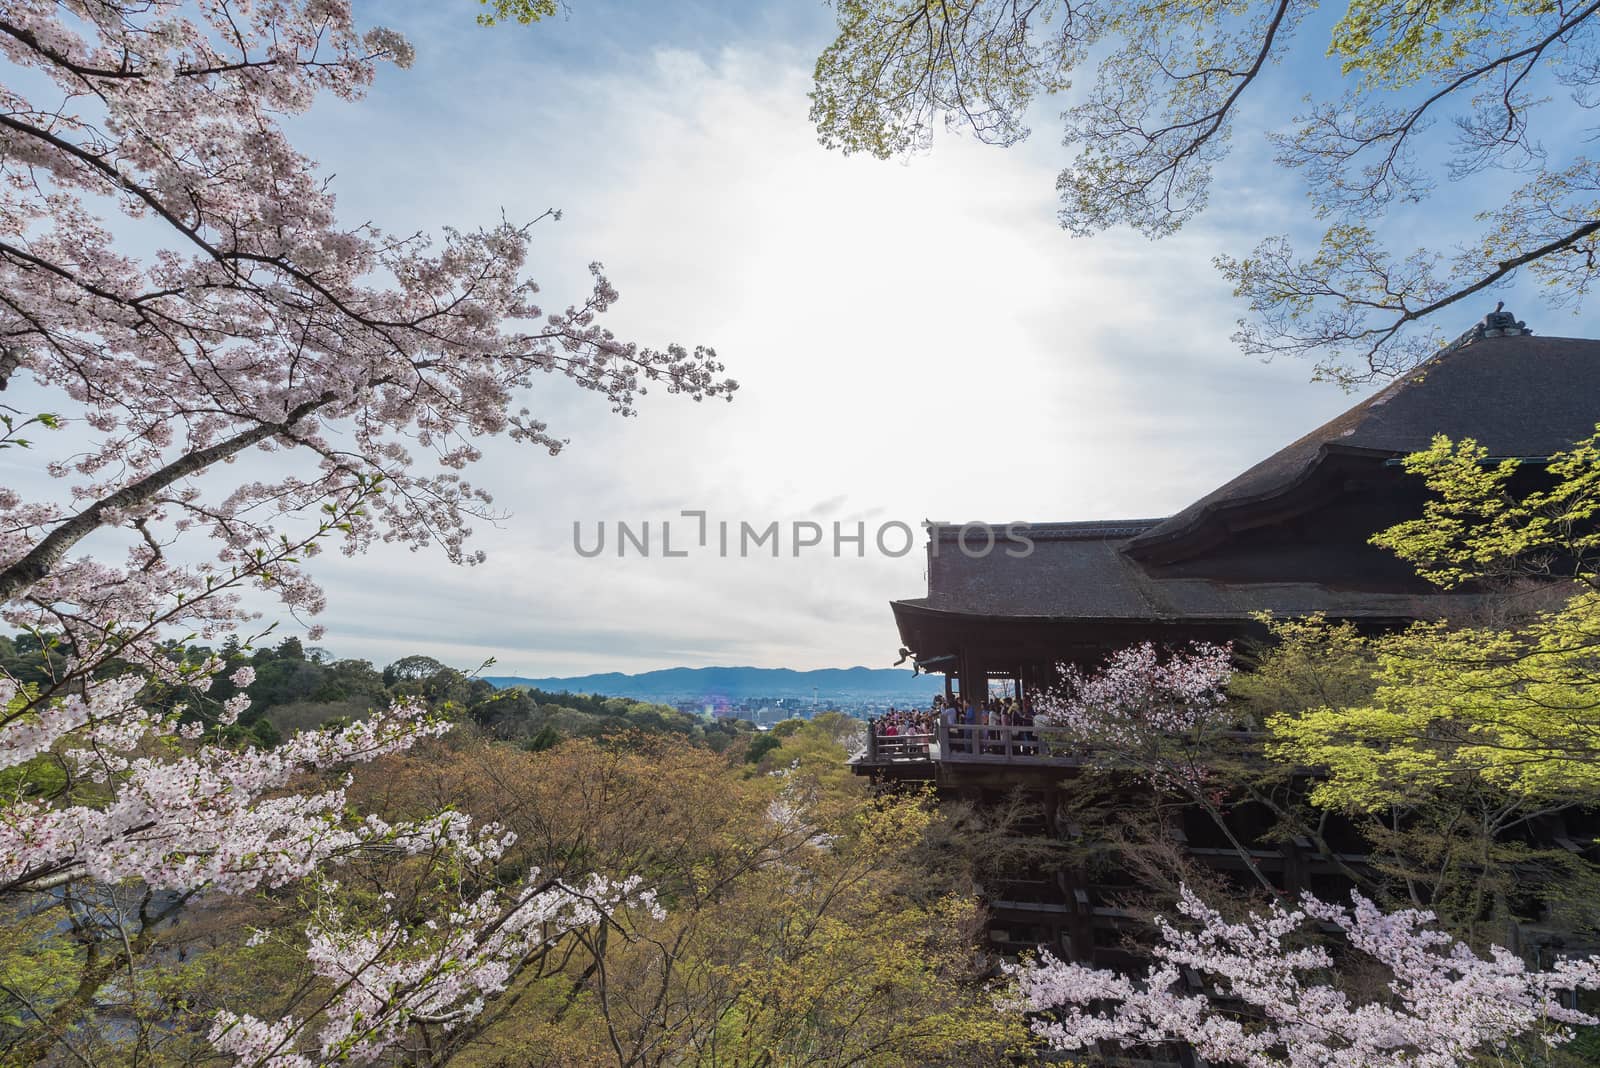 Kiyomizu dera temple and cherry blossom season (Sakura) on spring time in Kyoto, Japan